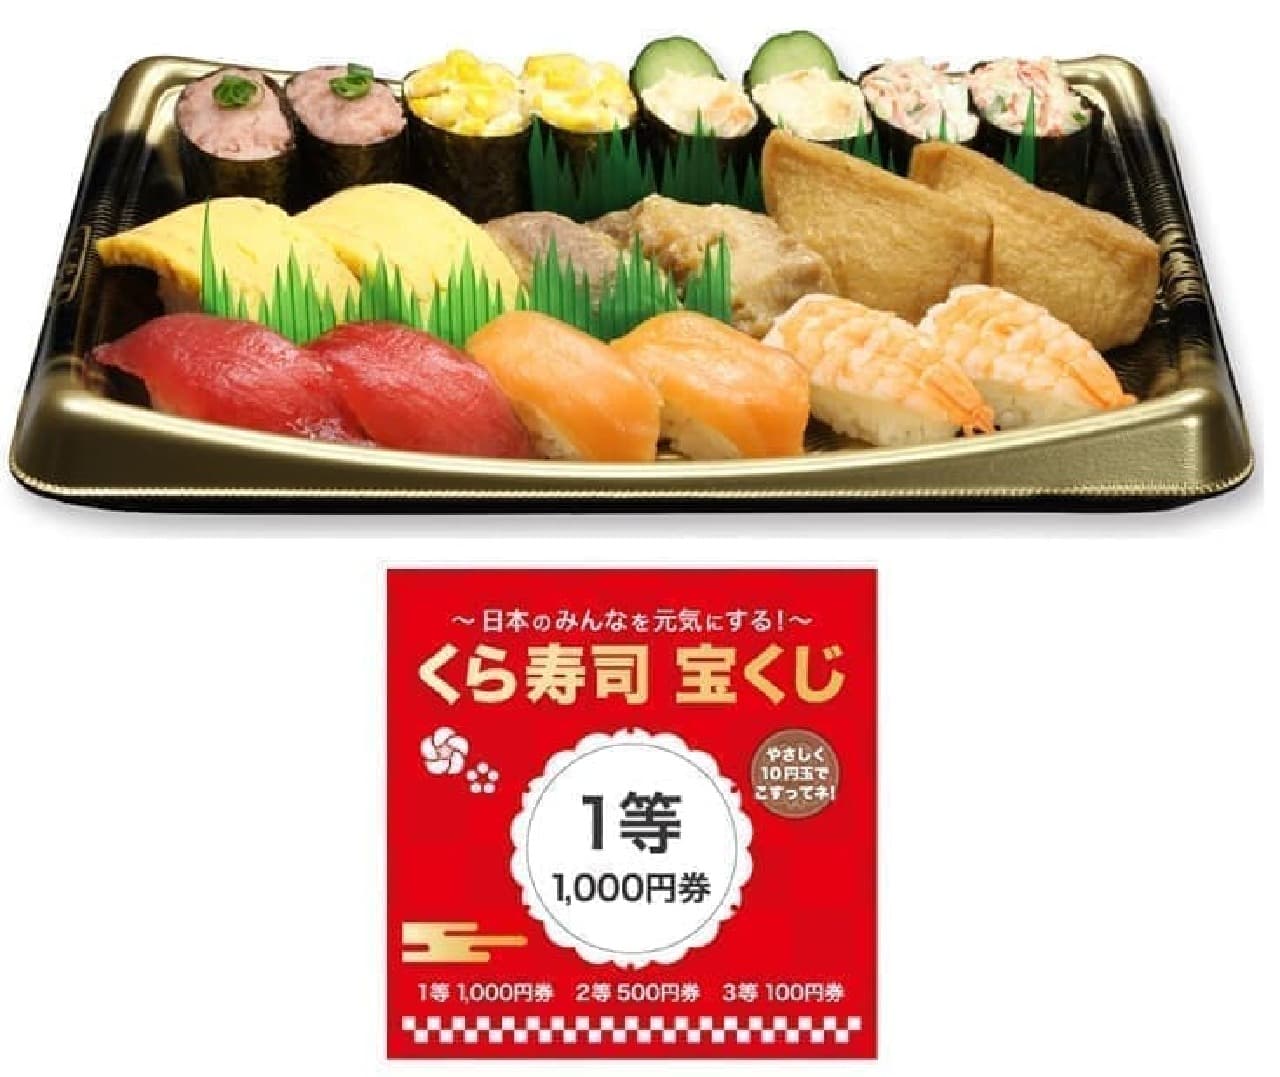 Kura Sushi "Kura Sushi Lottery Set"